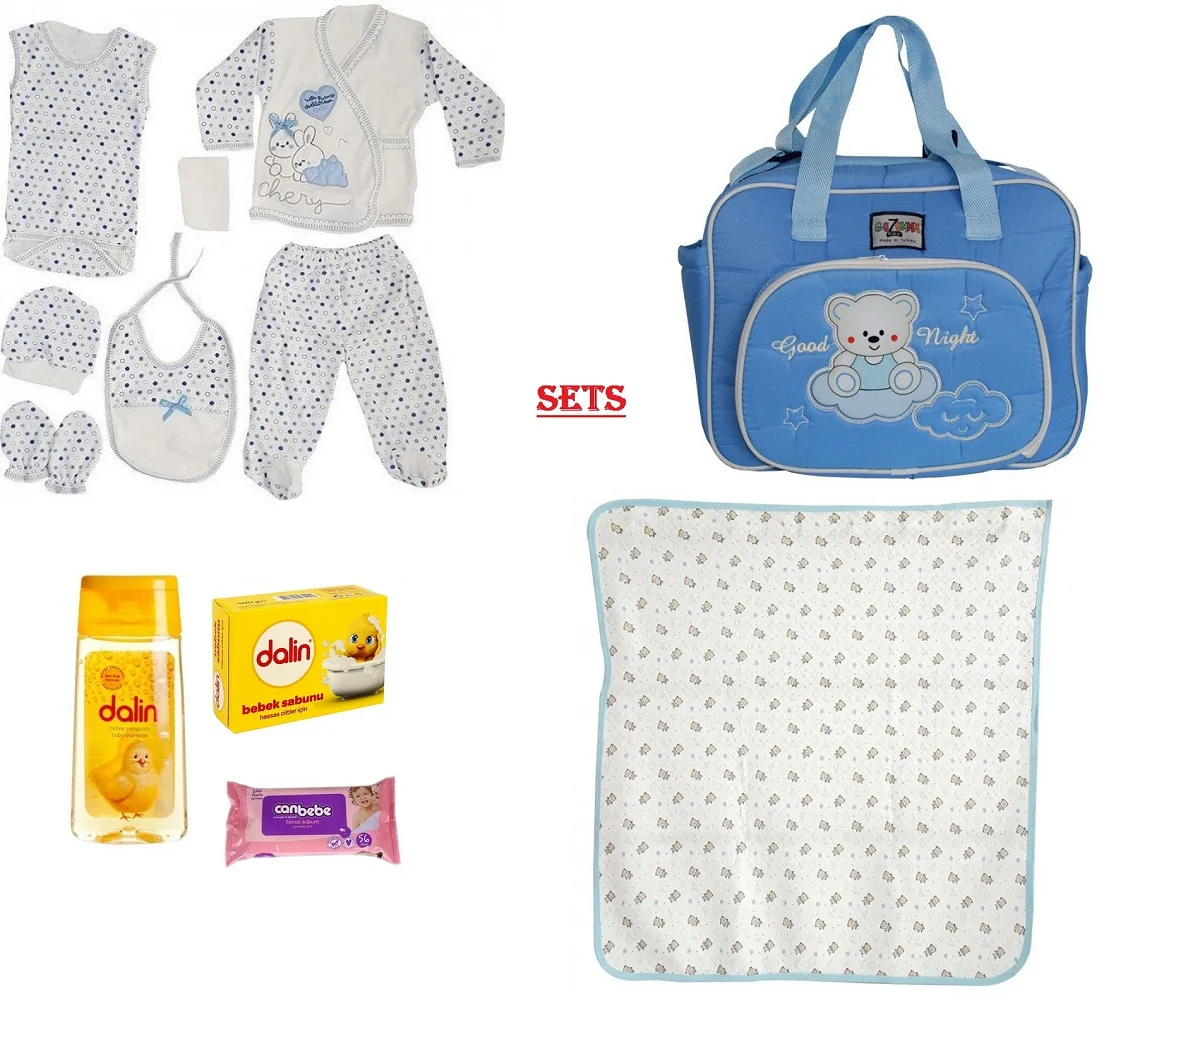 Male Baby Care Set Hospital Output Team Maternity Set Bag Wet Wipes Shampoo Blanket 2021 New Season Deal Product